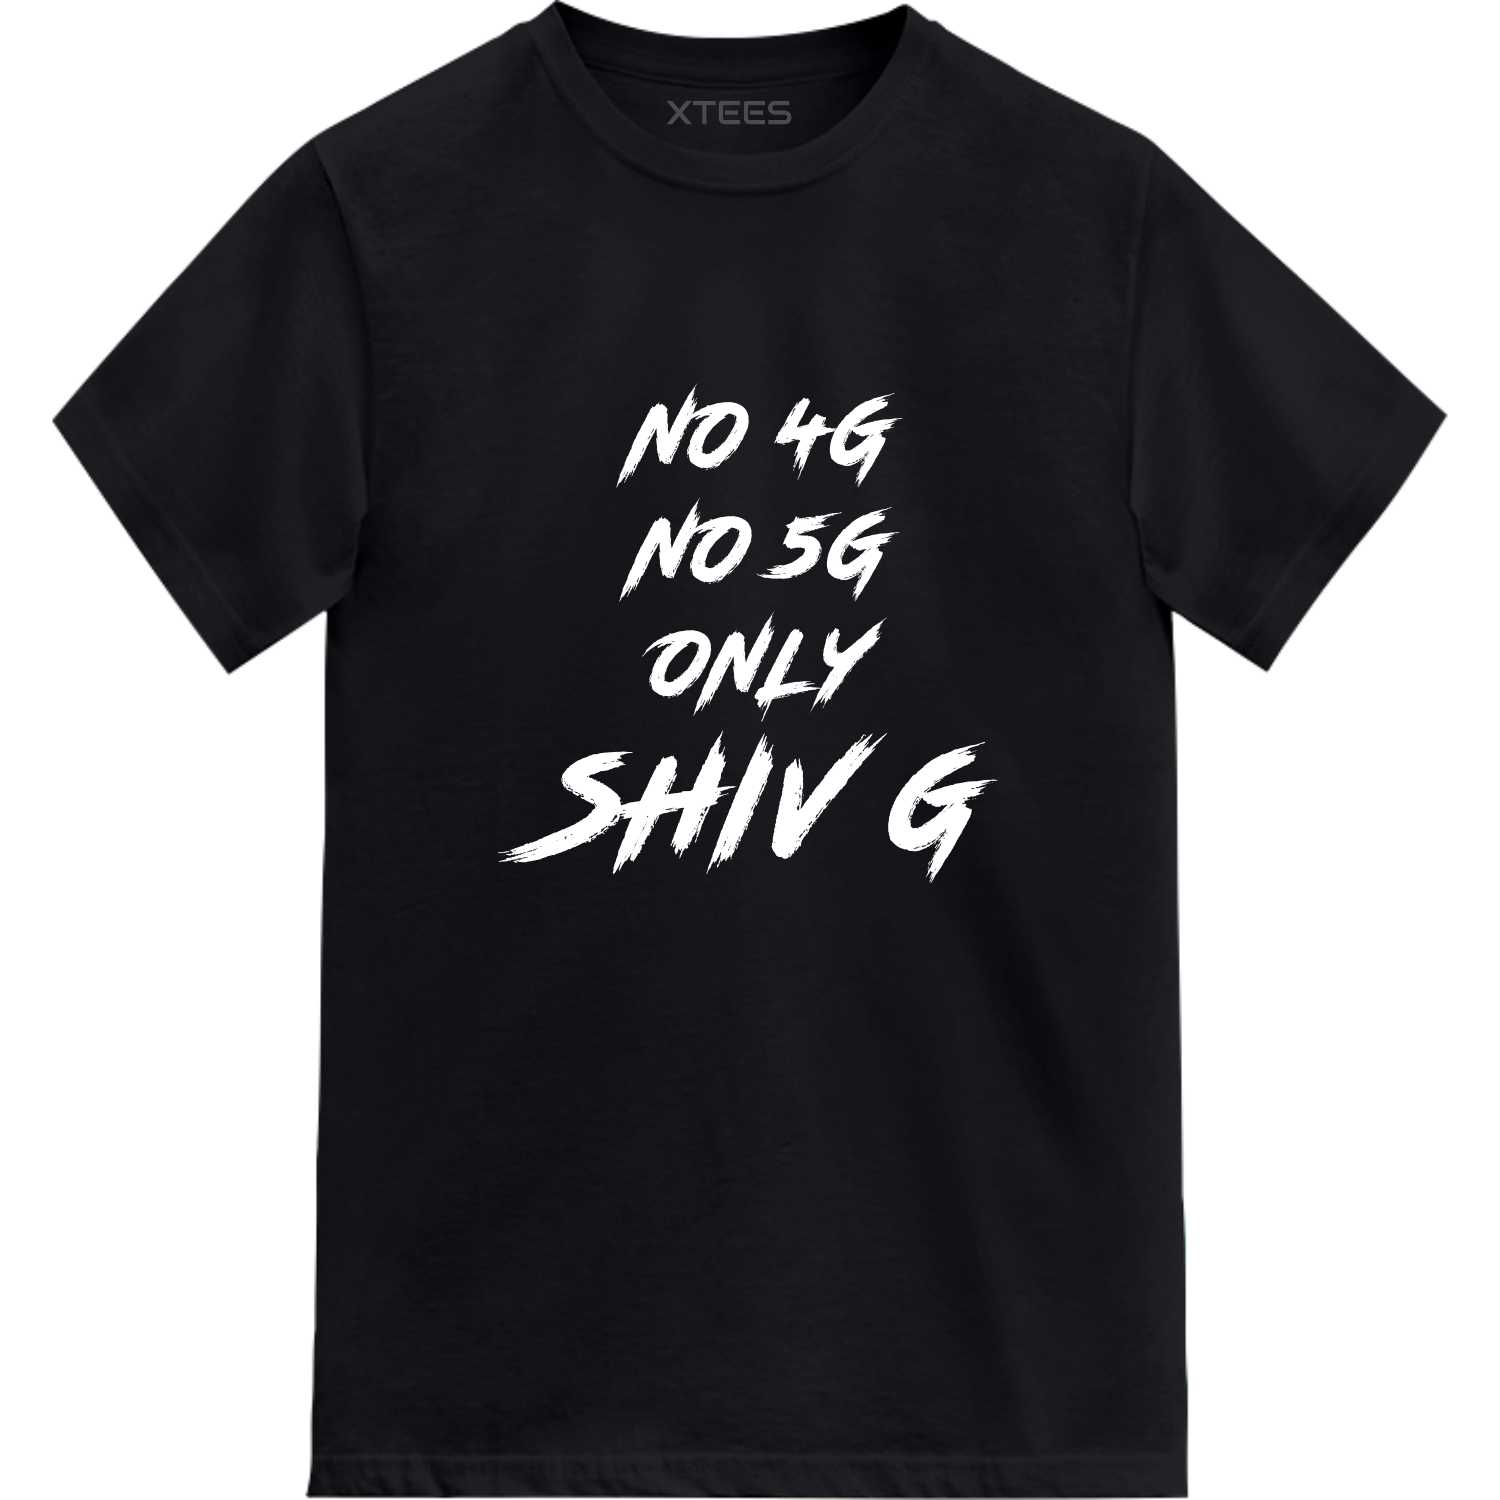 No 4g No 5g Only Shiv G Lord Shiva Hindu Devotional Slogan T-shirts image